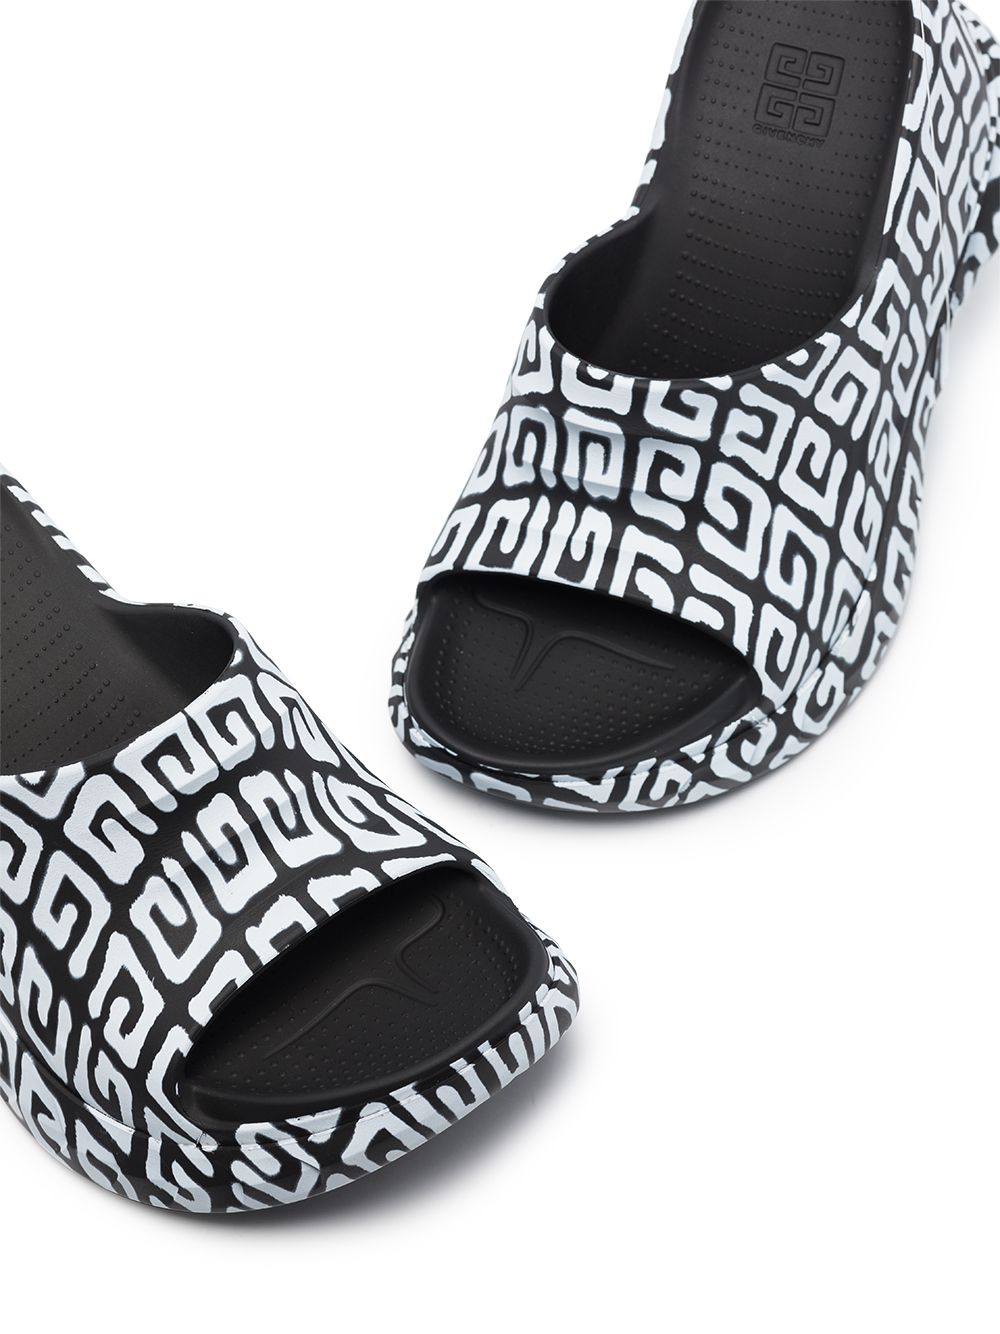 Givenchy Marshmallow 4G slide sandals Black